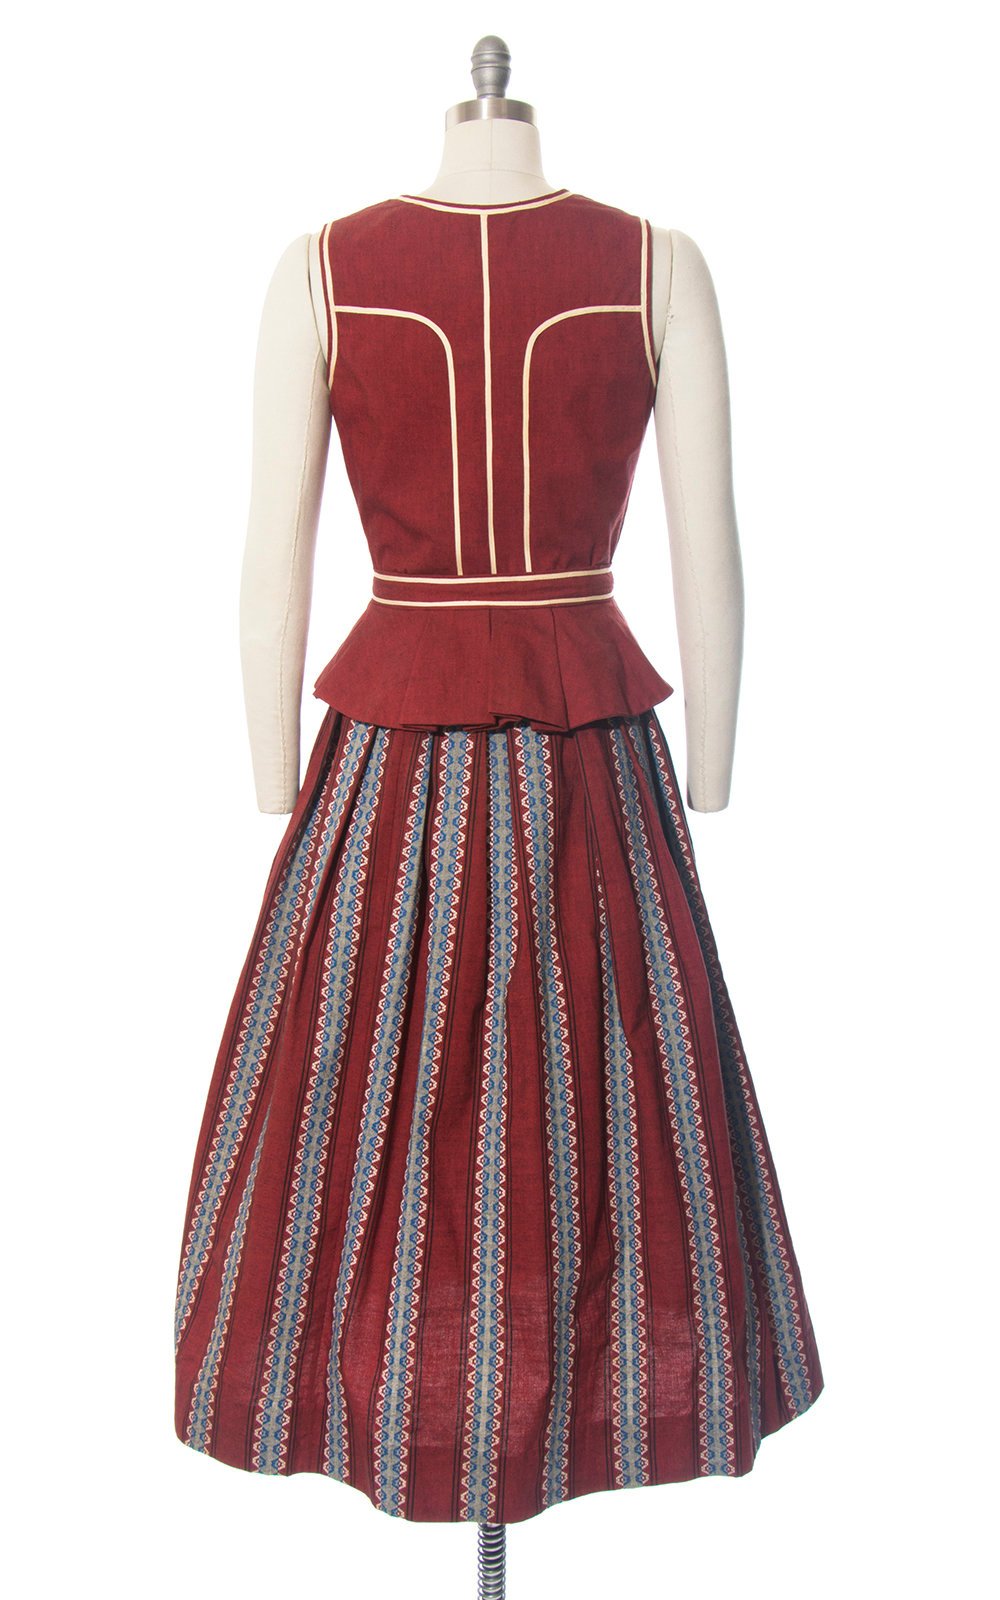 Vintage 1950s Dirndl Dress | 50s Striped Cotton Sundress Burgundy Lace Up Traditional Oktoberfest Dirndl w/ Attachable Peplum (small)